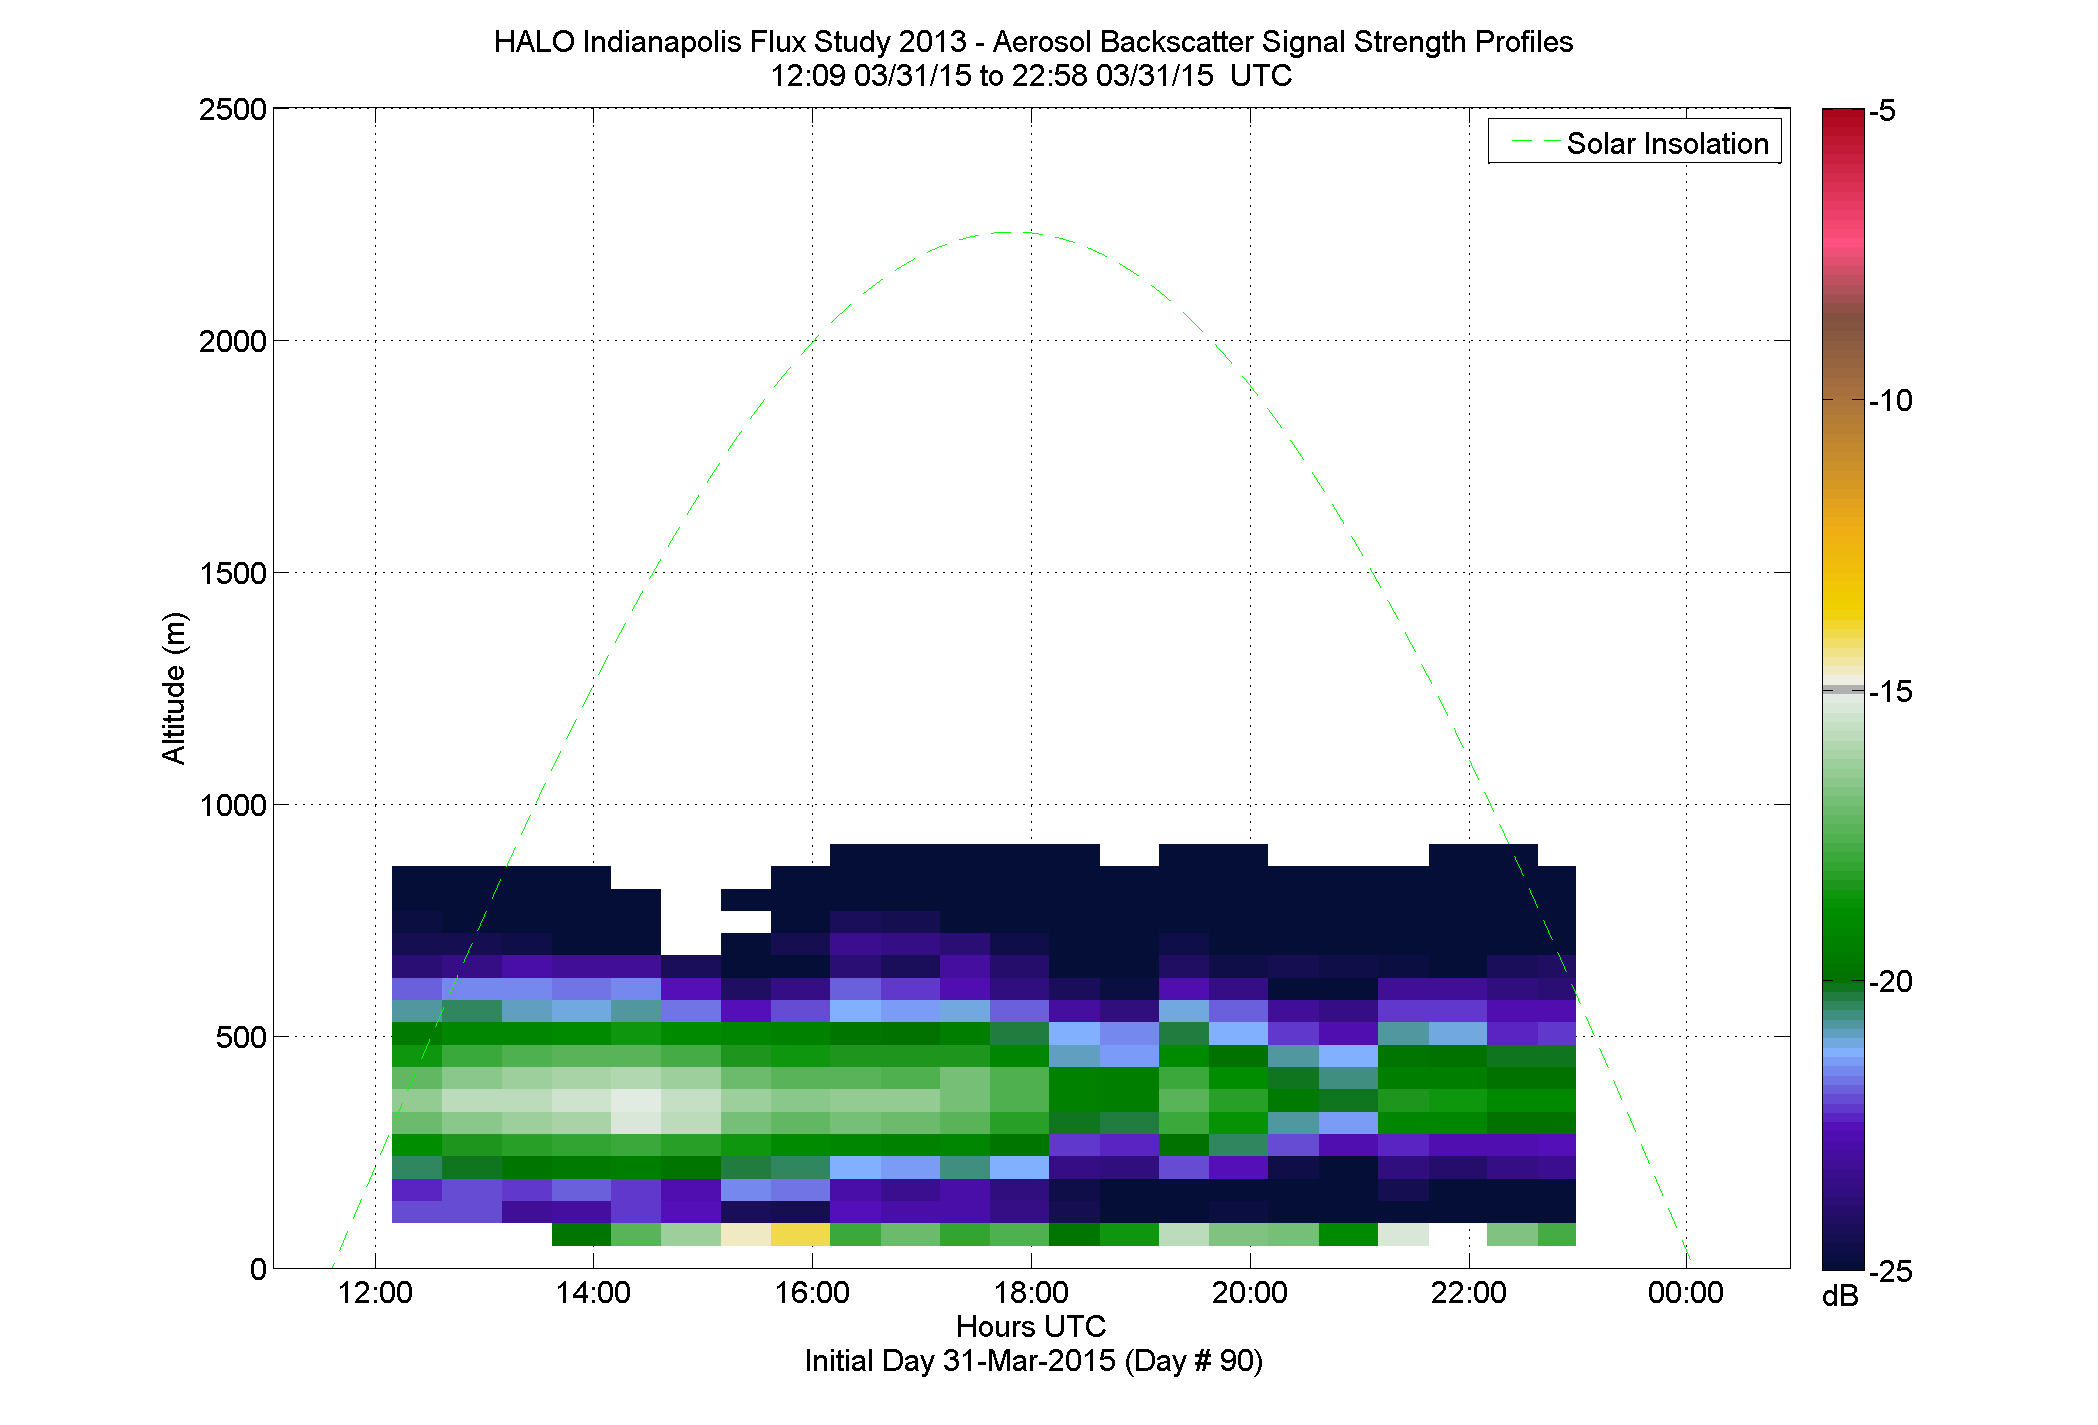 HALO aerosol backscatter signal strength profile - March 31 pm